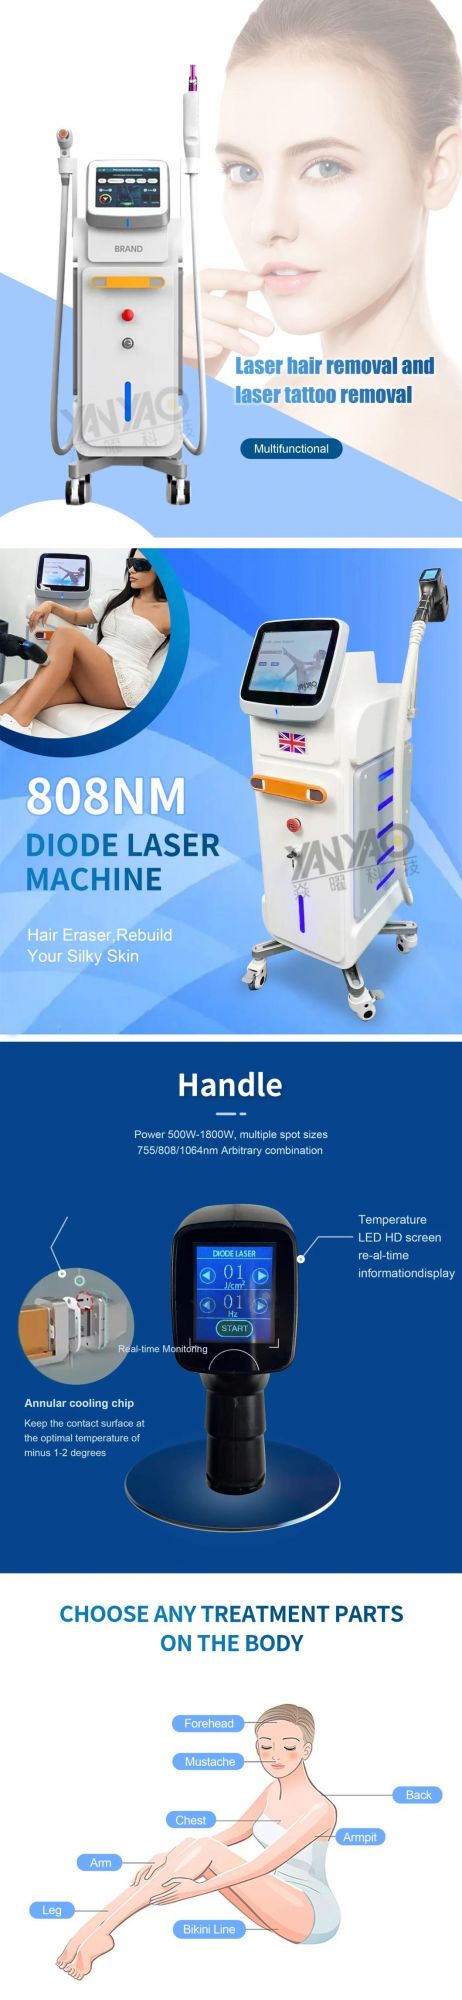 Laser Diodo / 808nm Diode Laser Hair Removal Machine/755+808+1064 808nm Diode Laser